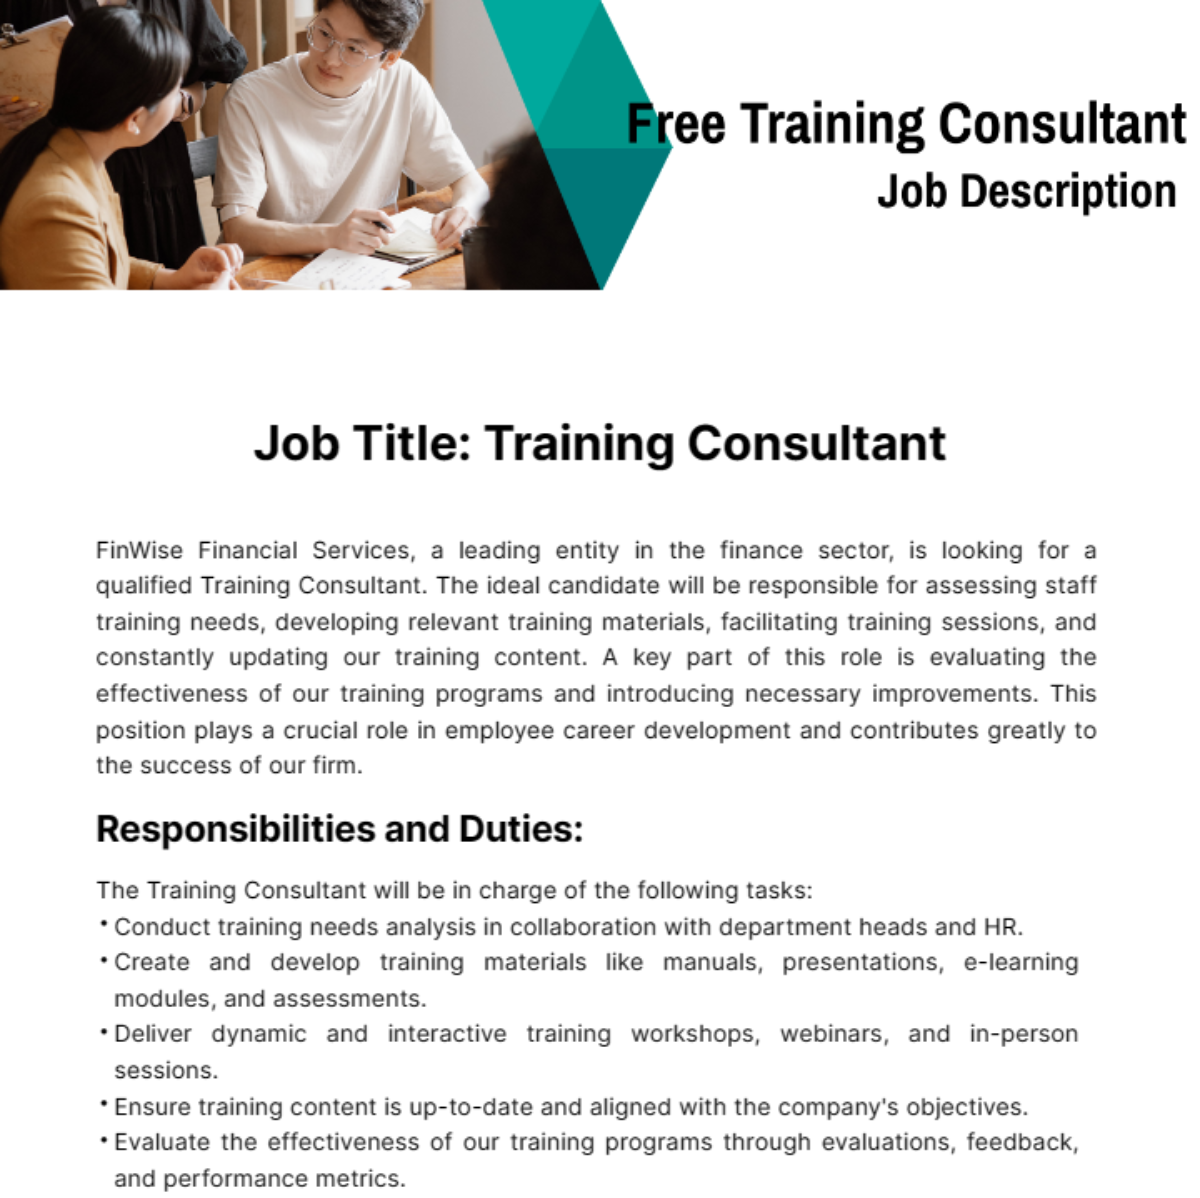 Free Training Consultant Job Description Template